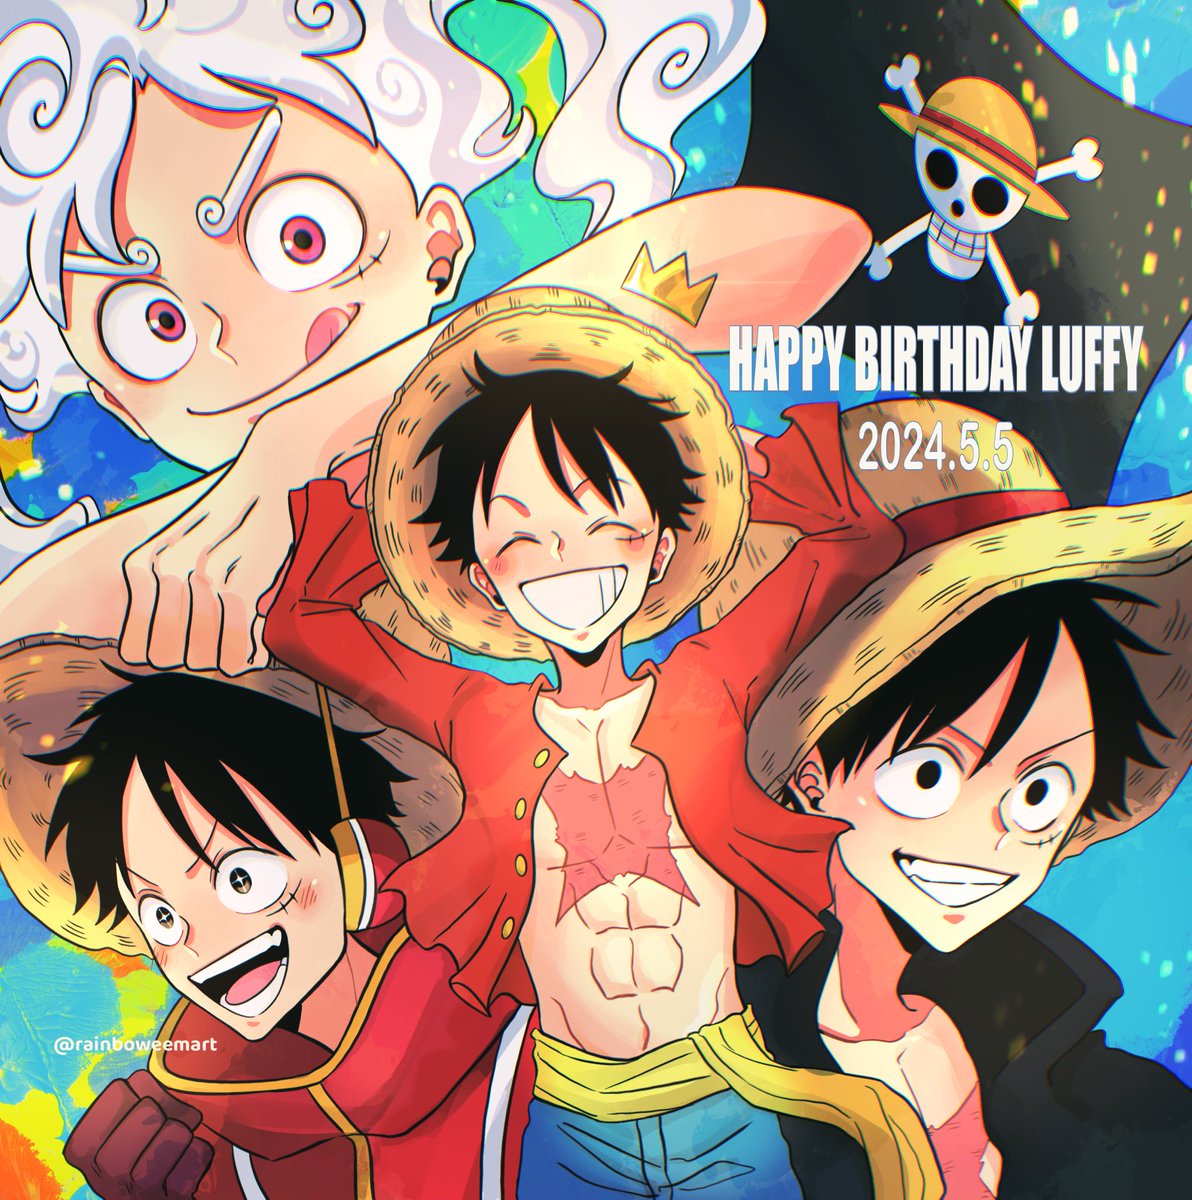 Happy Birthday Luffy!! 🎉🎉
Our future pirate king 👑❤️

#ルフィ誕生祭2024
#LuffyBirthday2024
#ONEPIECE #ルフィ